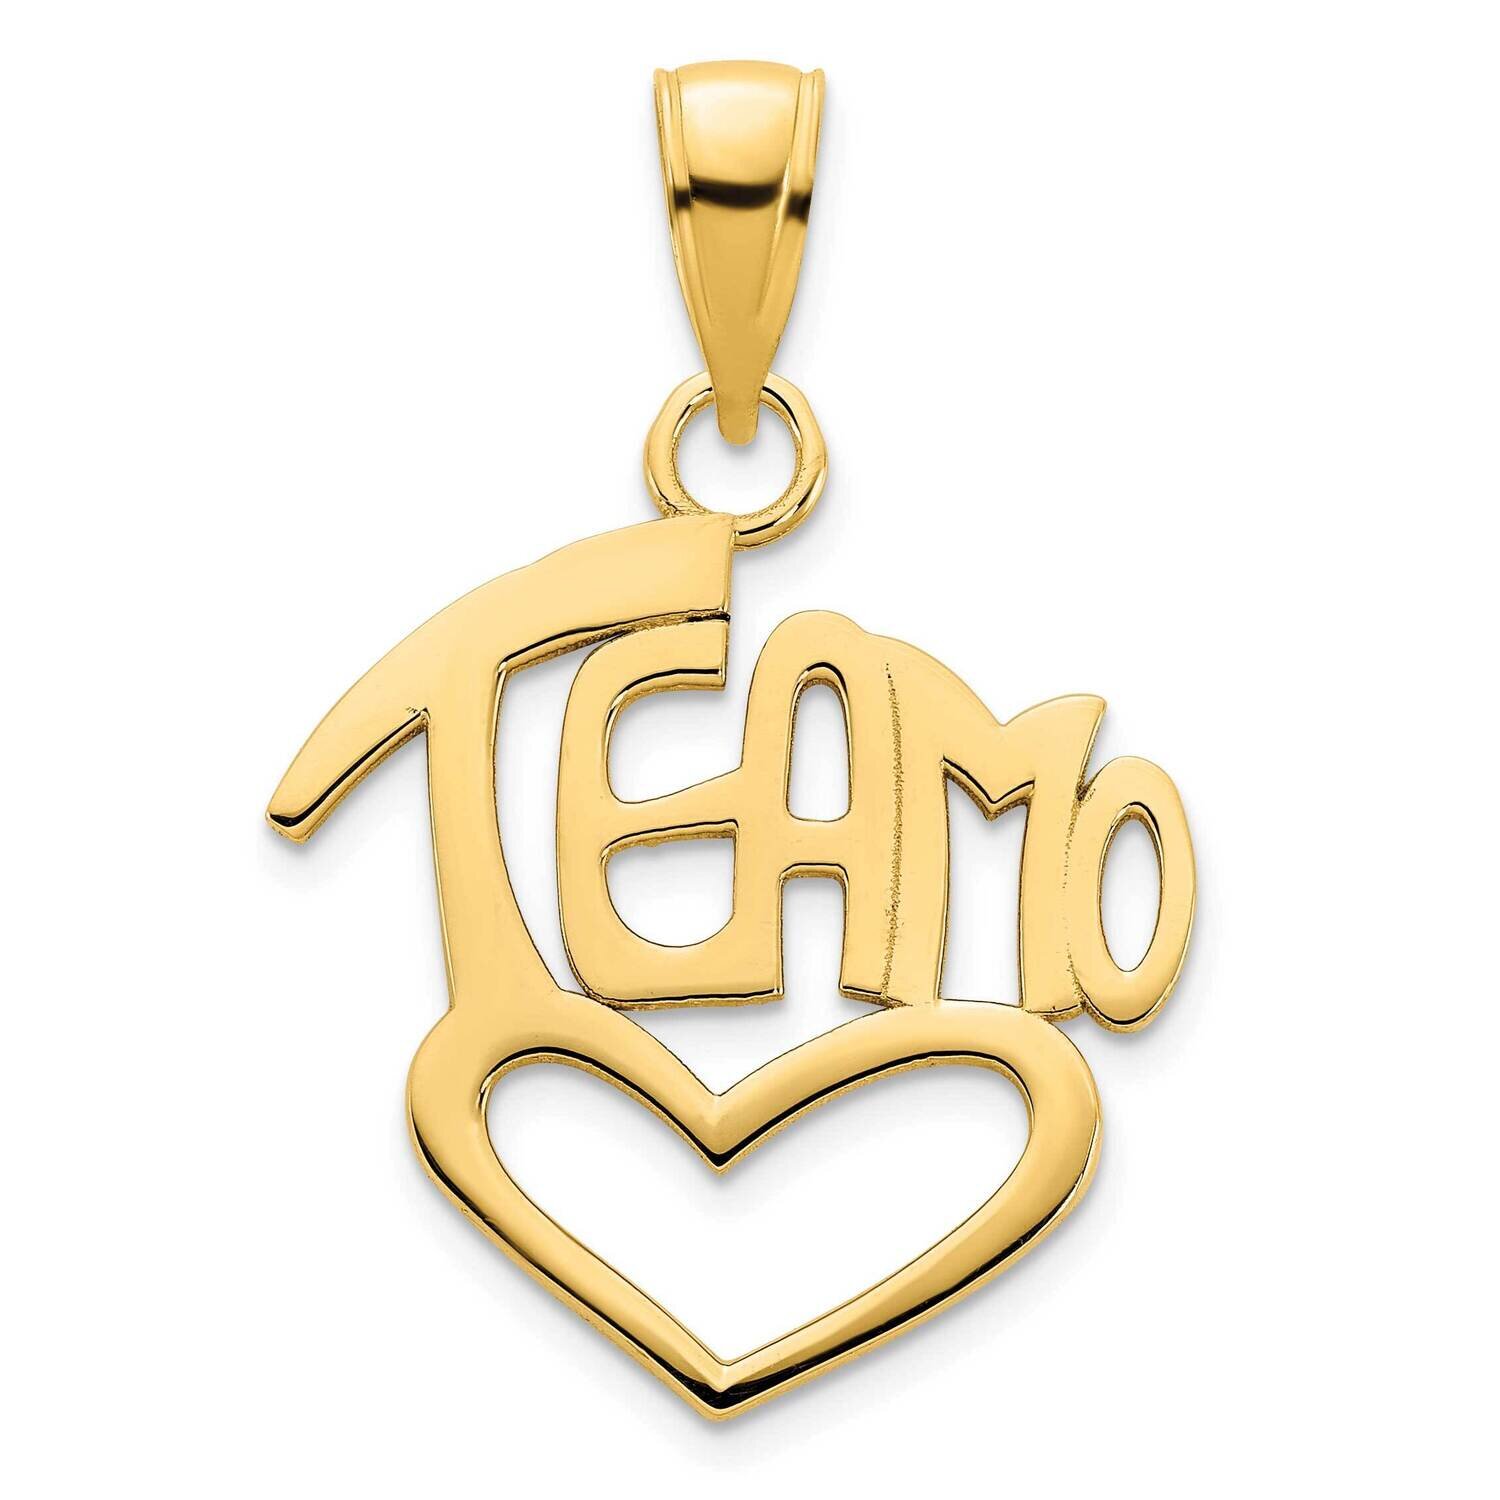 Teamo Heart Pendant 14k Gold D5026